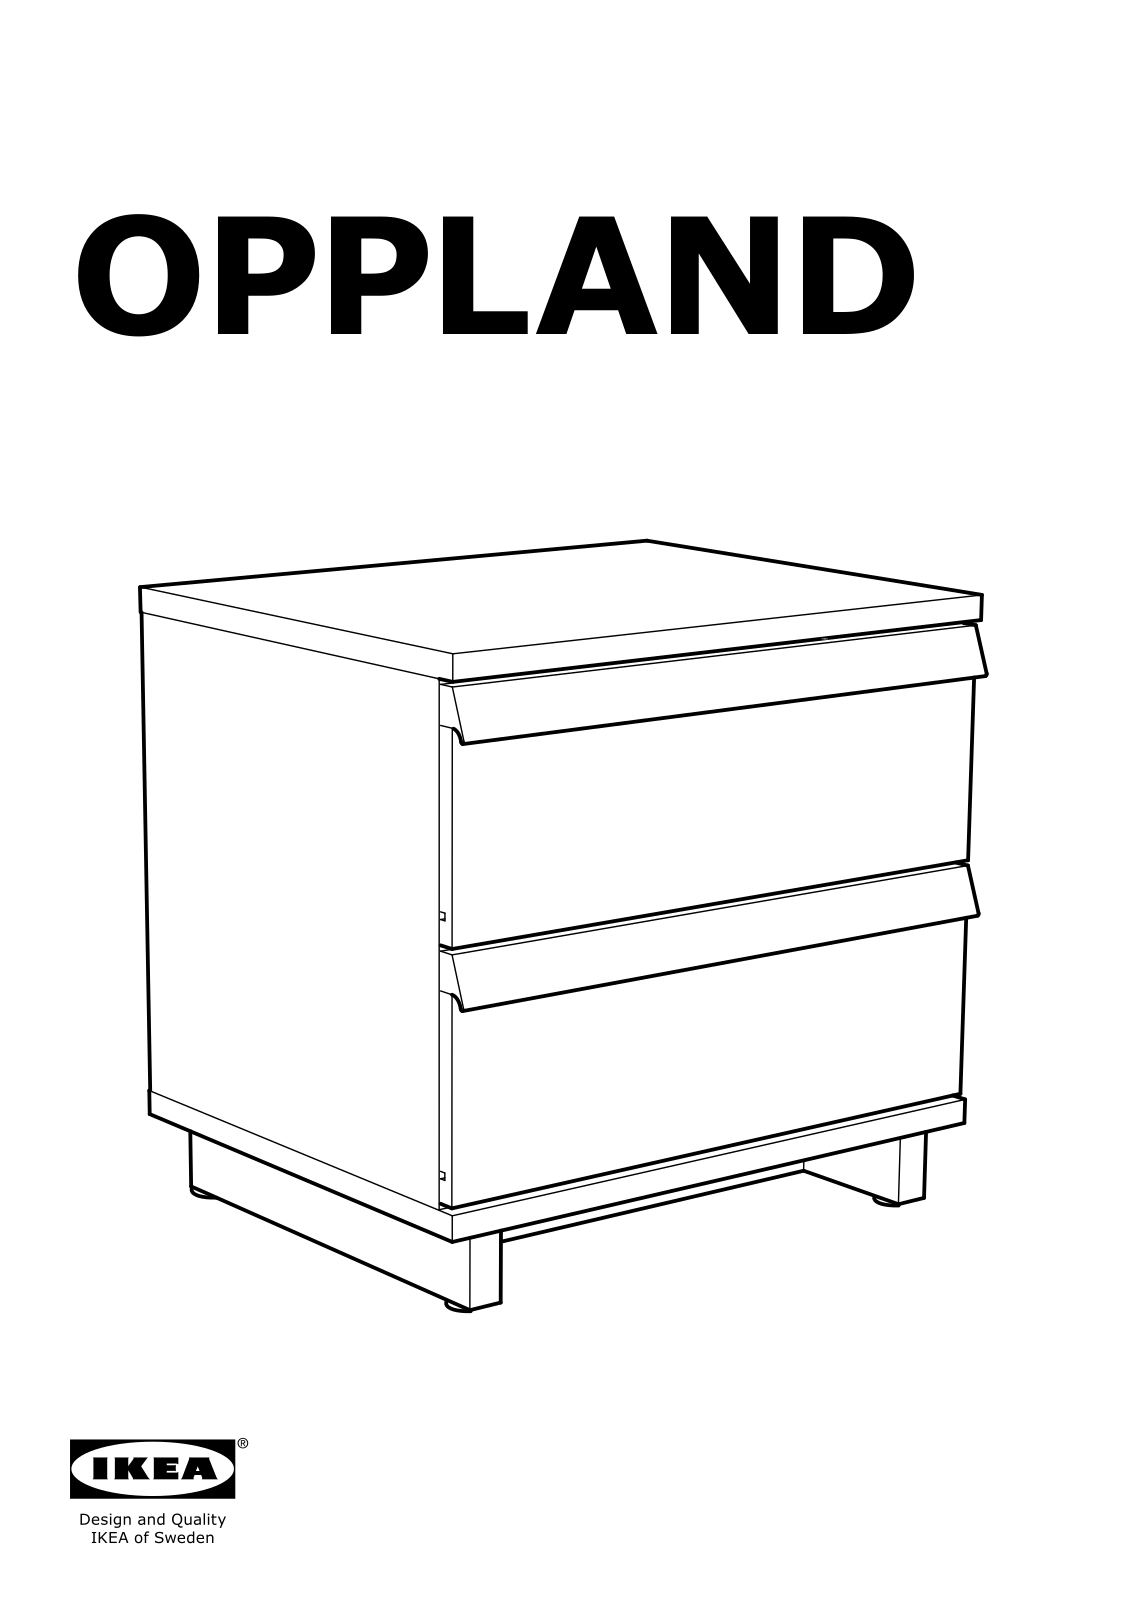 IKEA OPPLAND User Manual